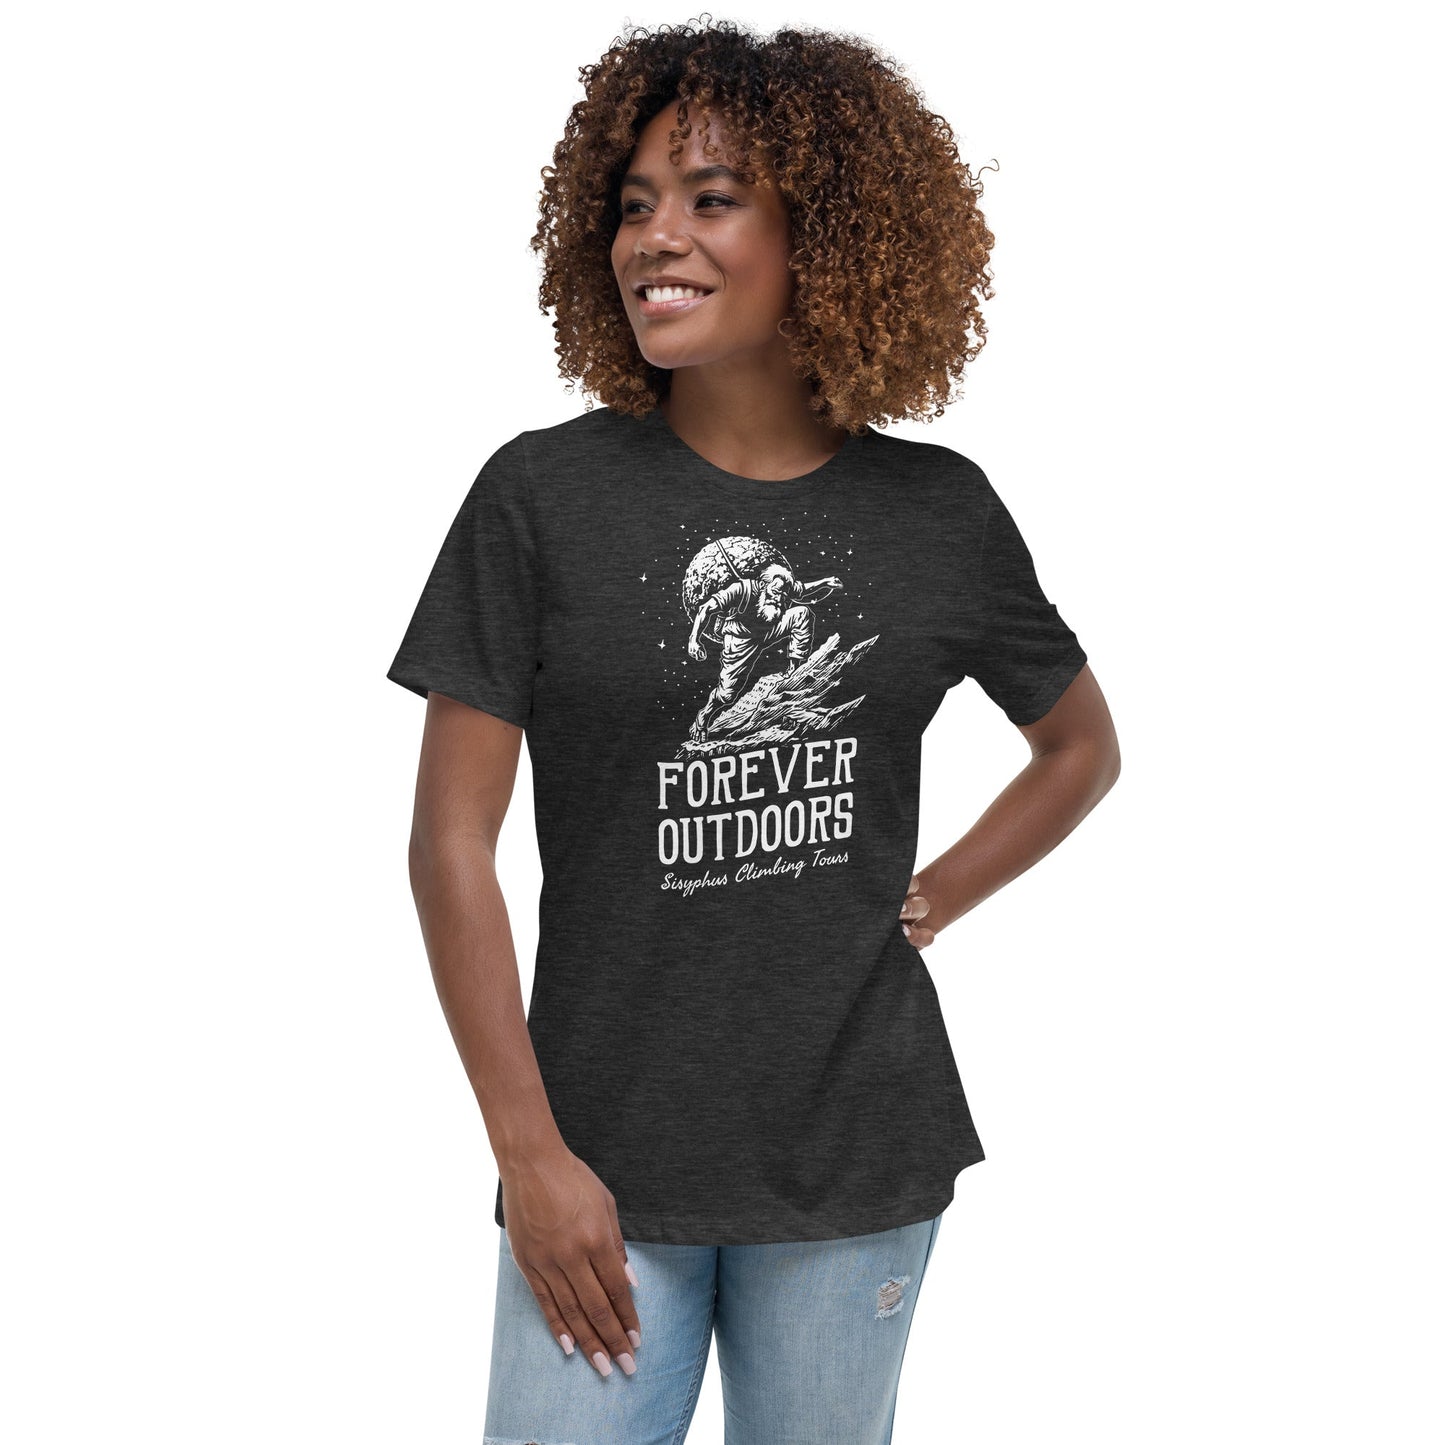 Forever Outdoors - Sisyphus Climbing Tours - Women's T-Shirt